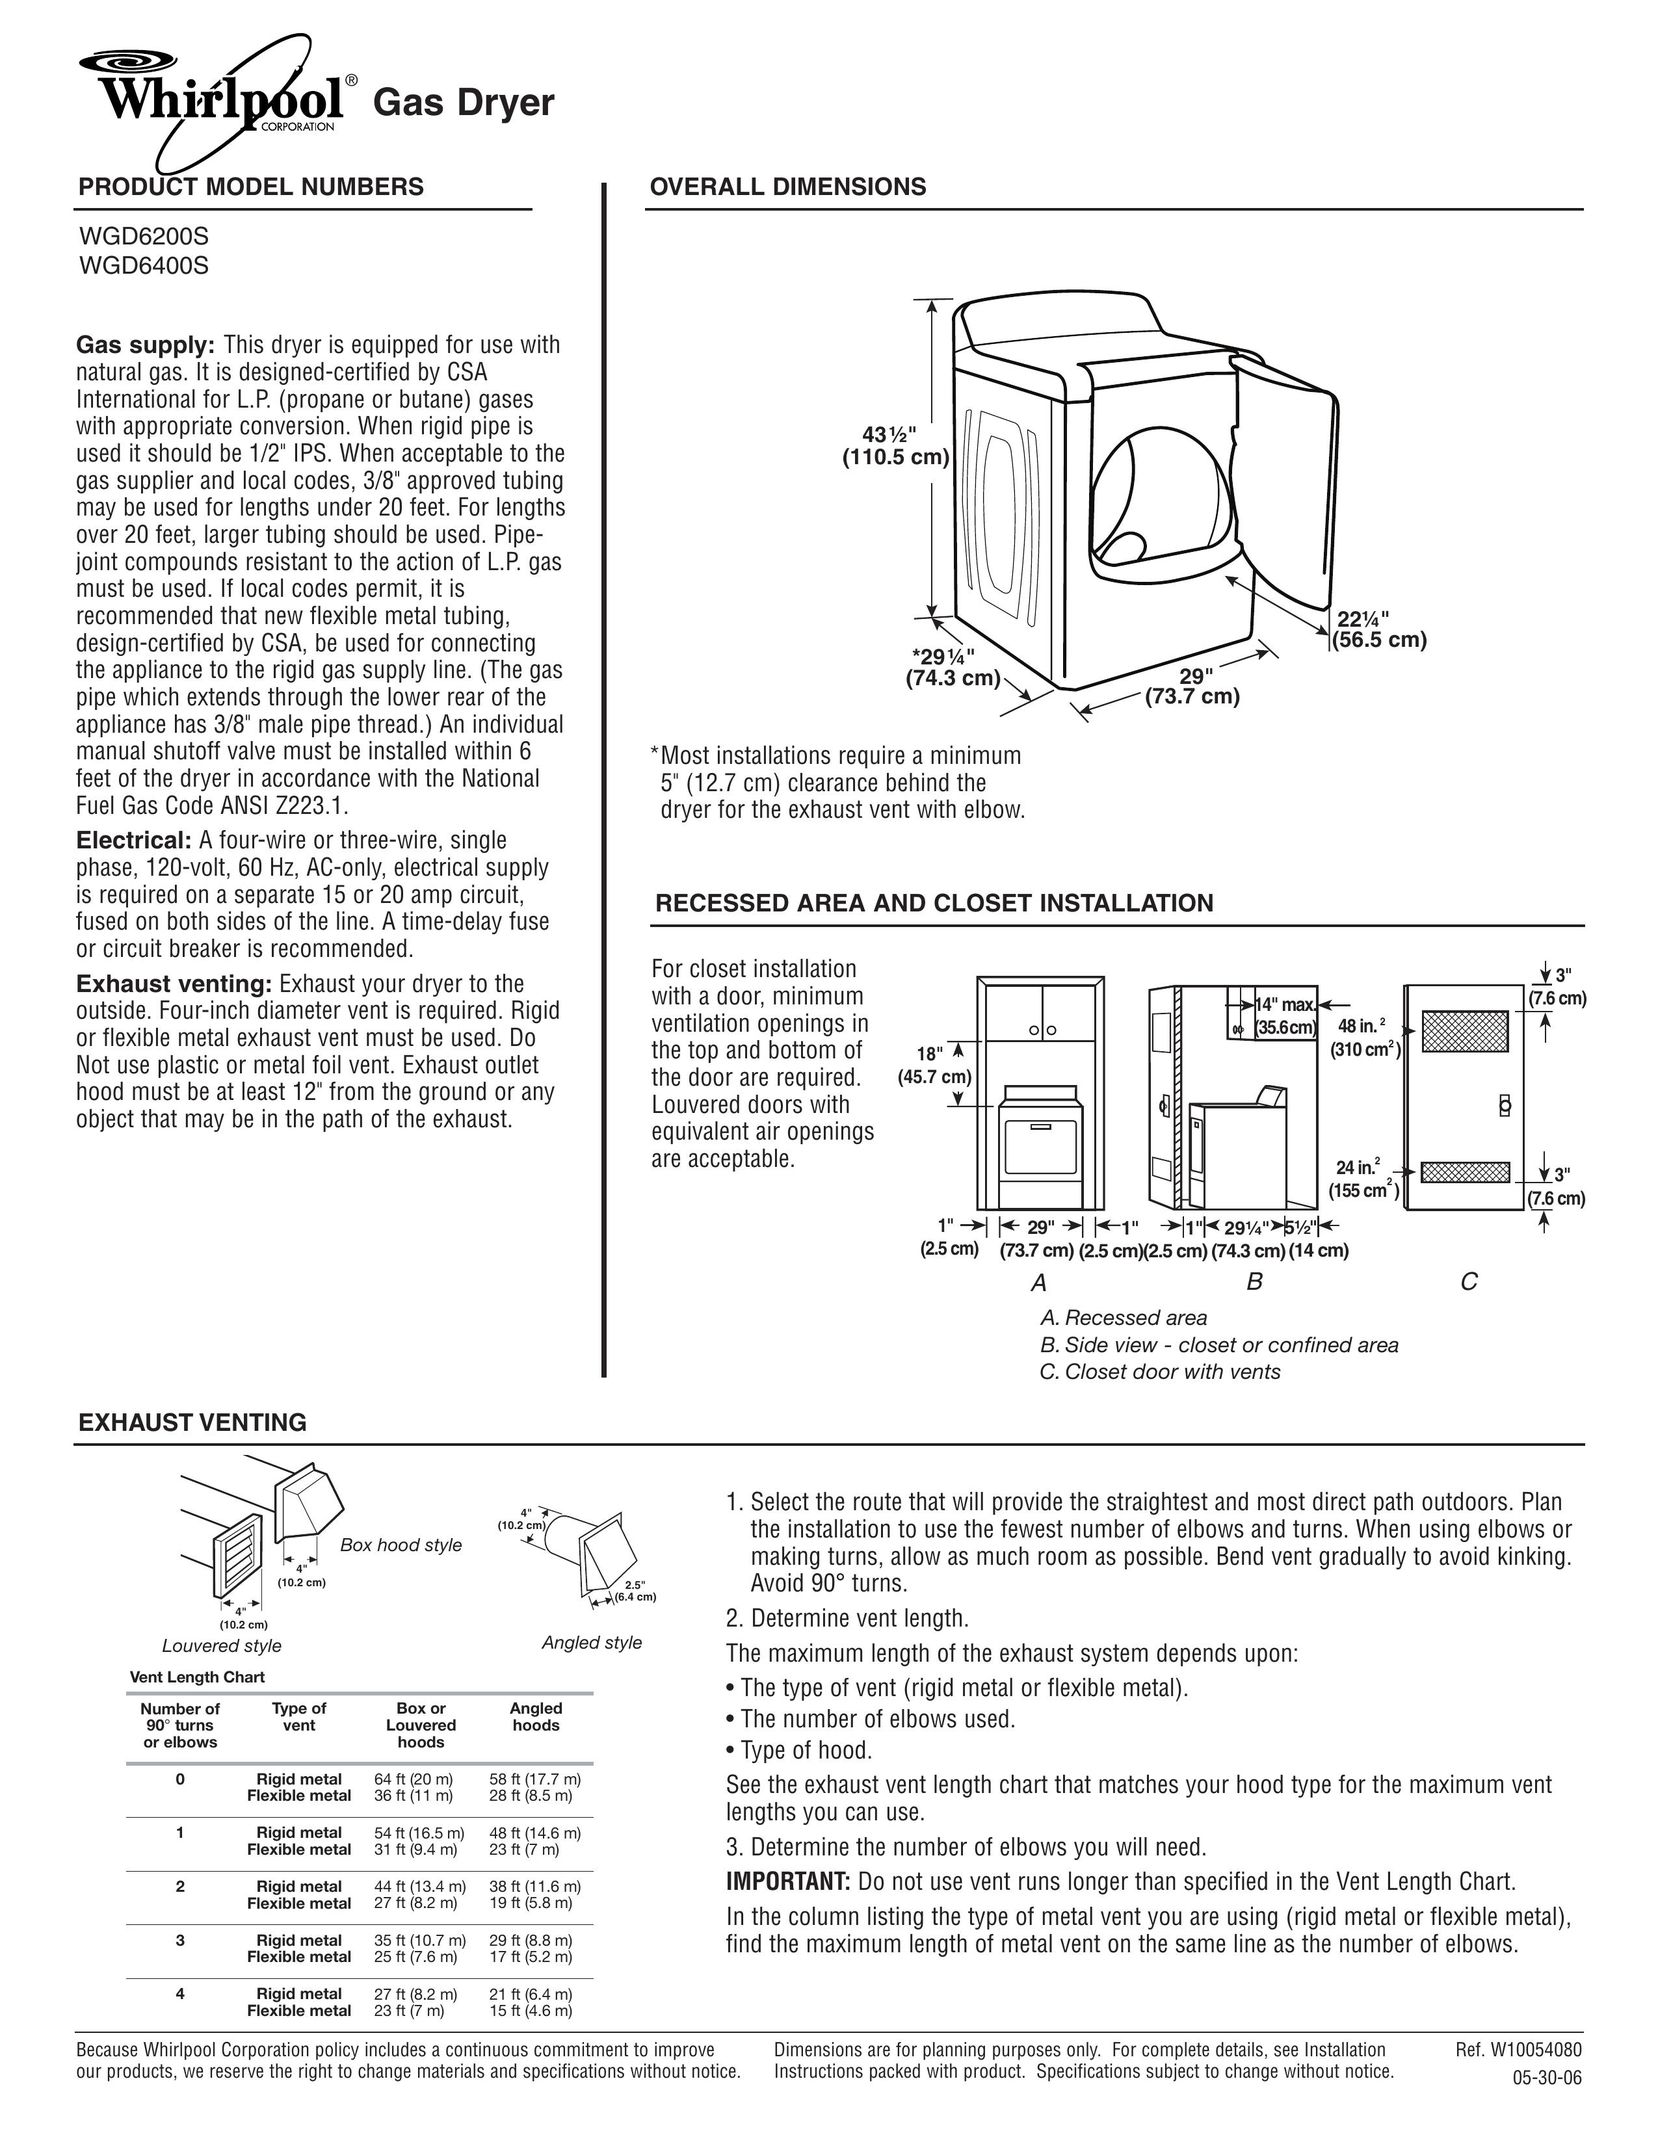 Whirlpool WGD6200S Computer Monitor User Manual